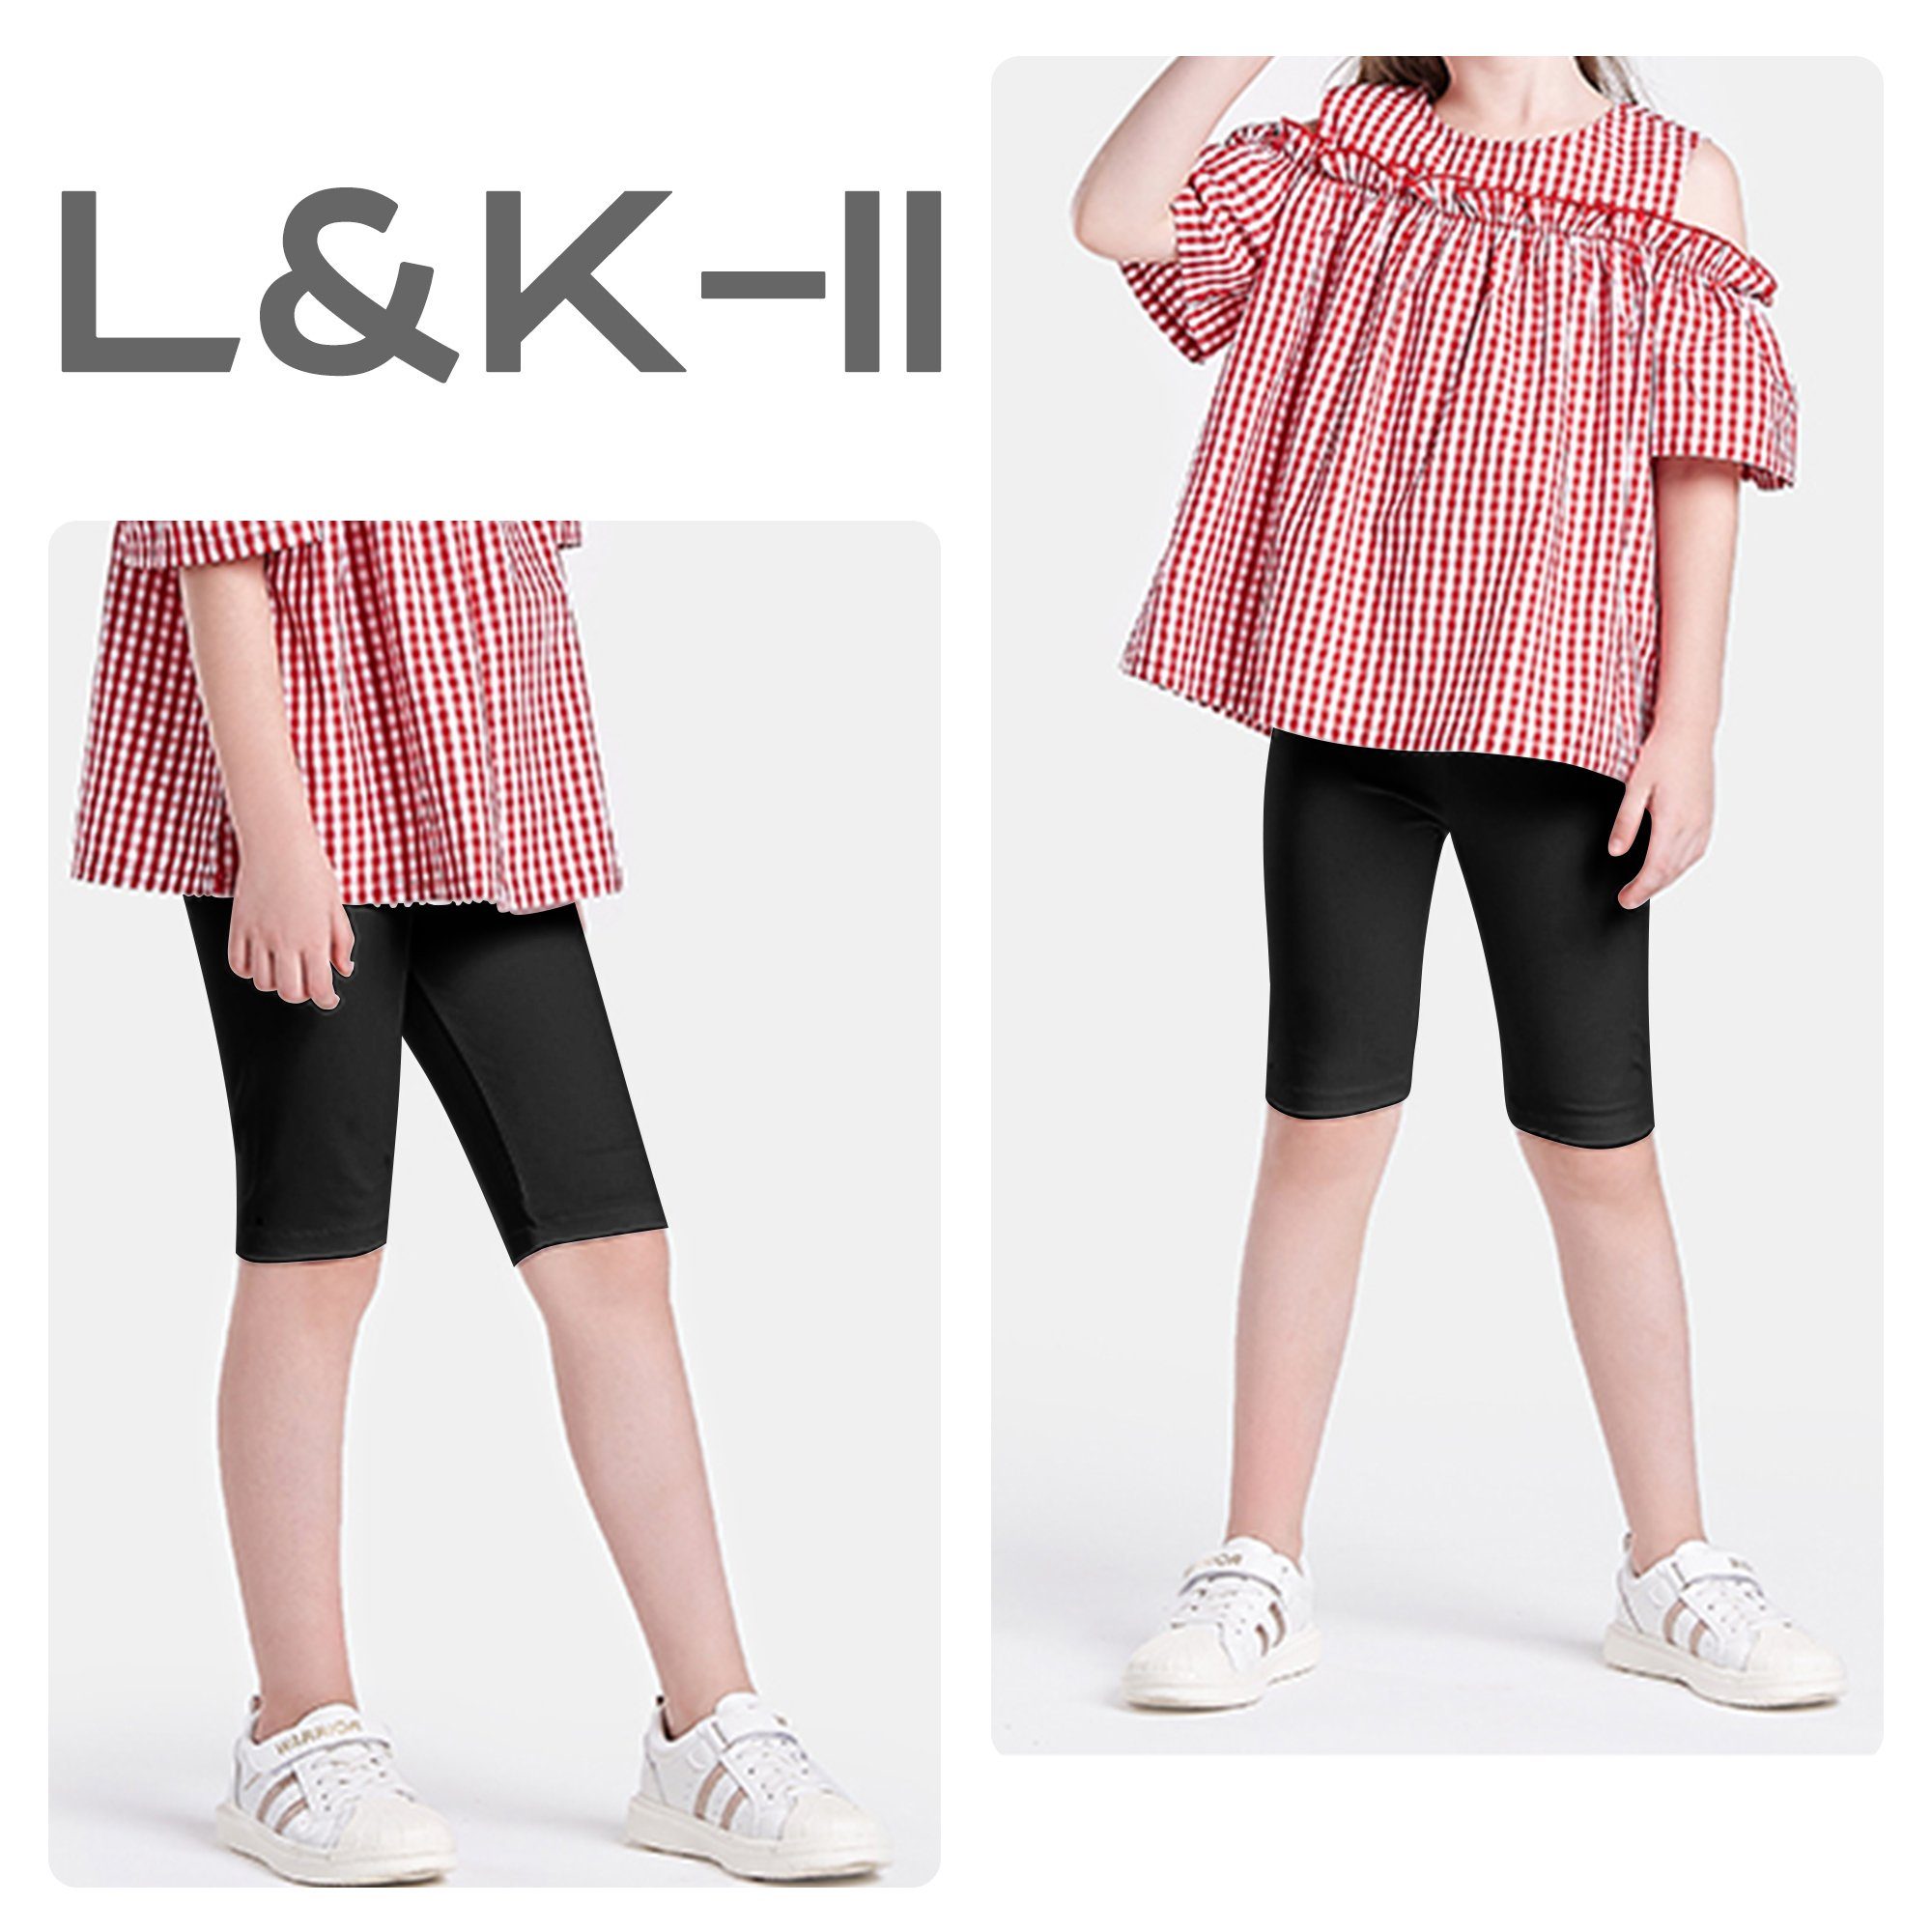 L&K-II Radlerhose 4532-2/3er (2/3er-Pack) Mädchen Radlerhose Kurz aus Leggings Schwarz/Dunkelblau Baumwolle